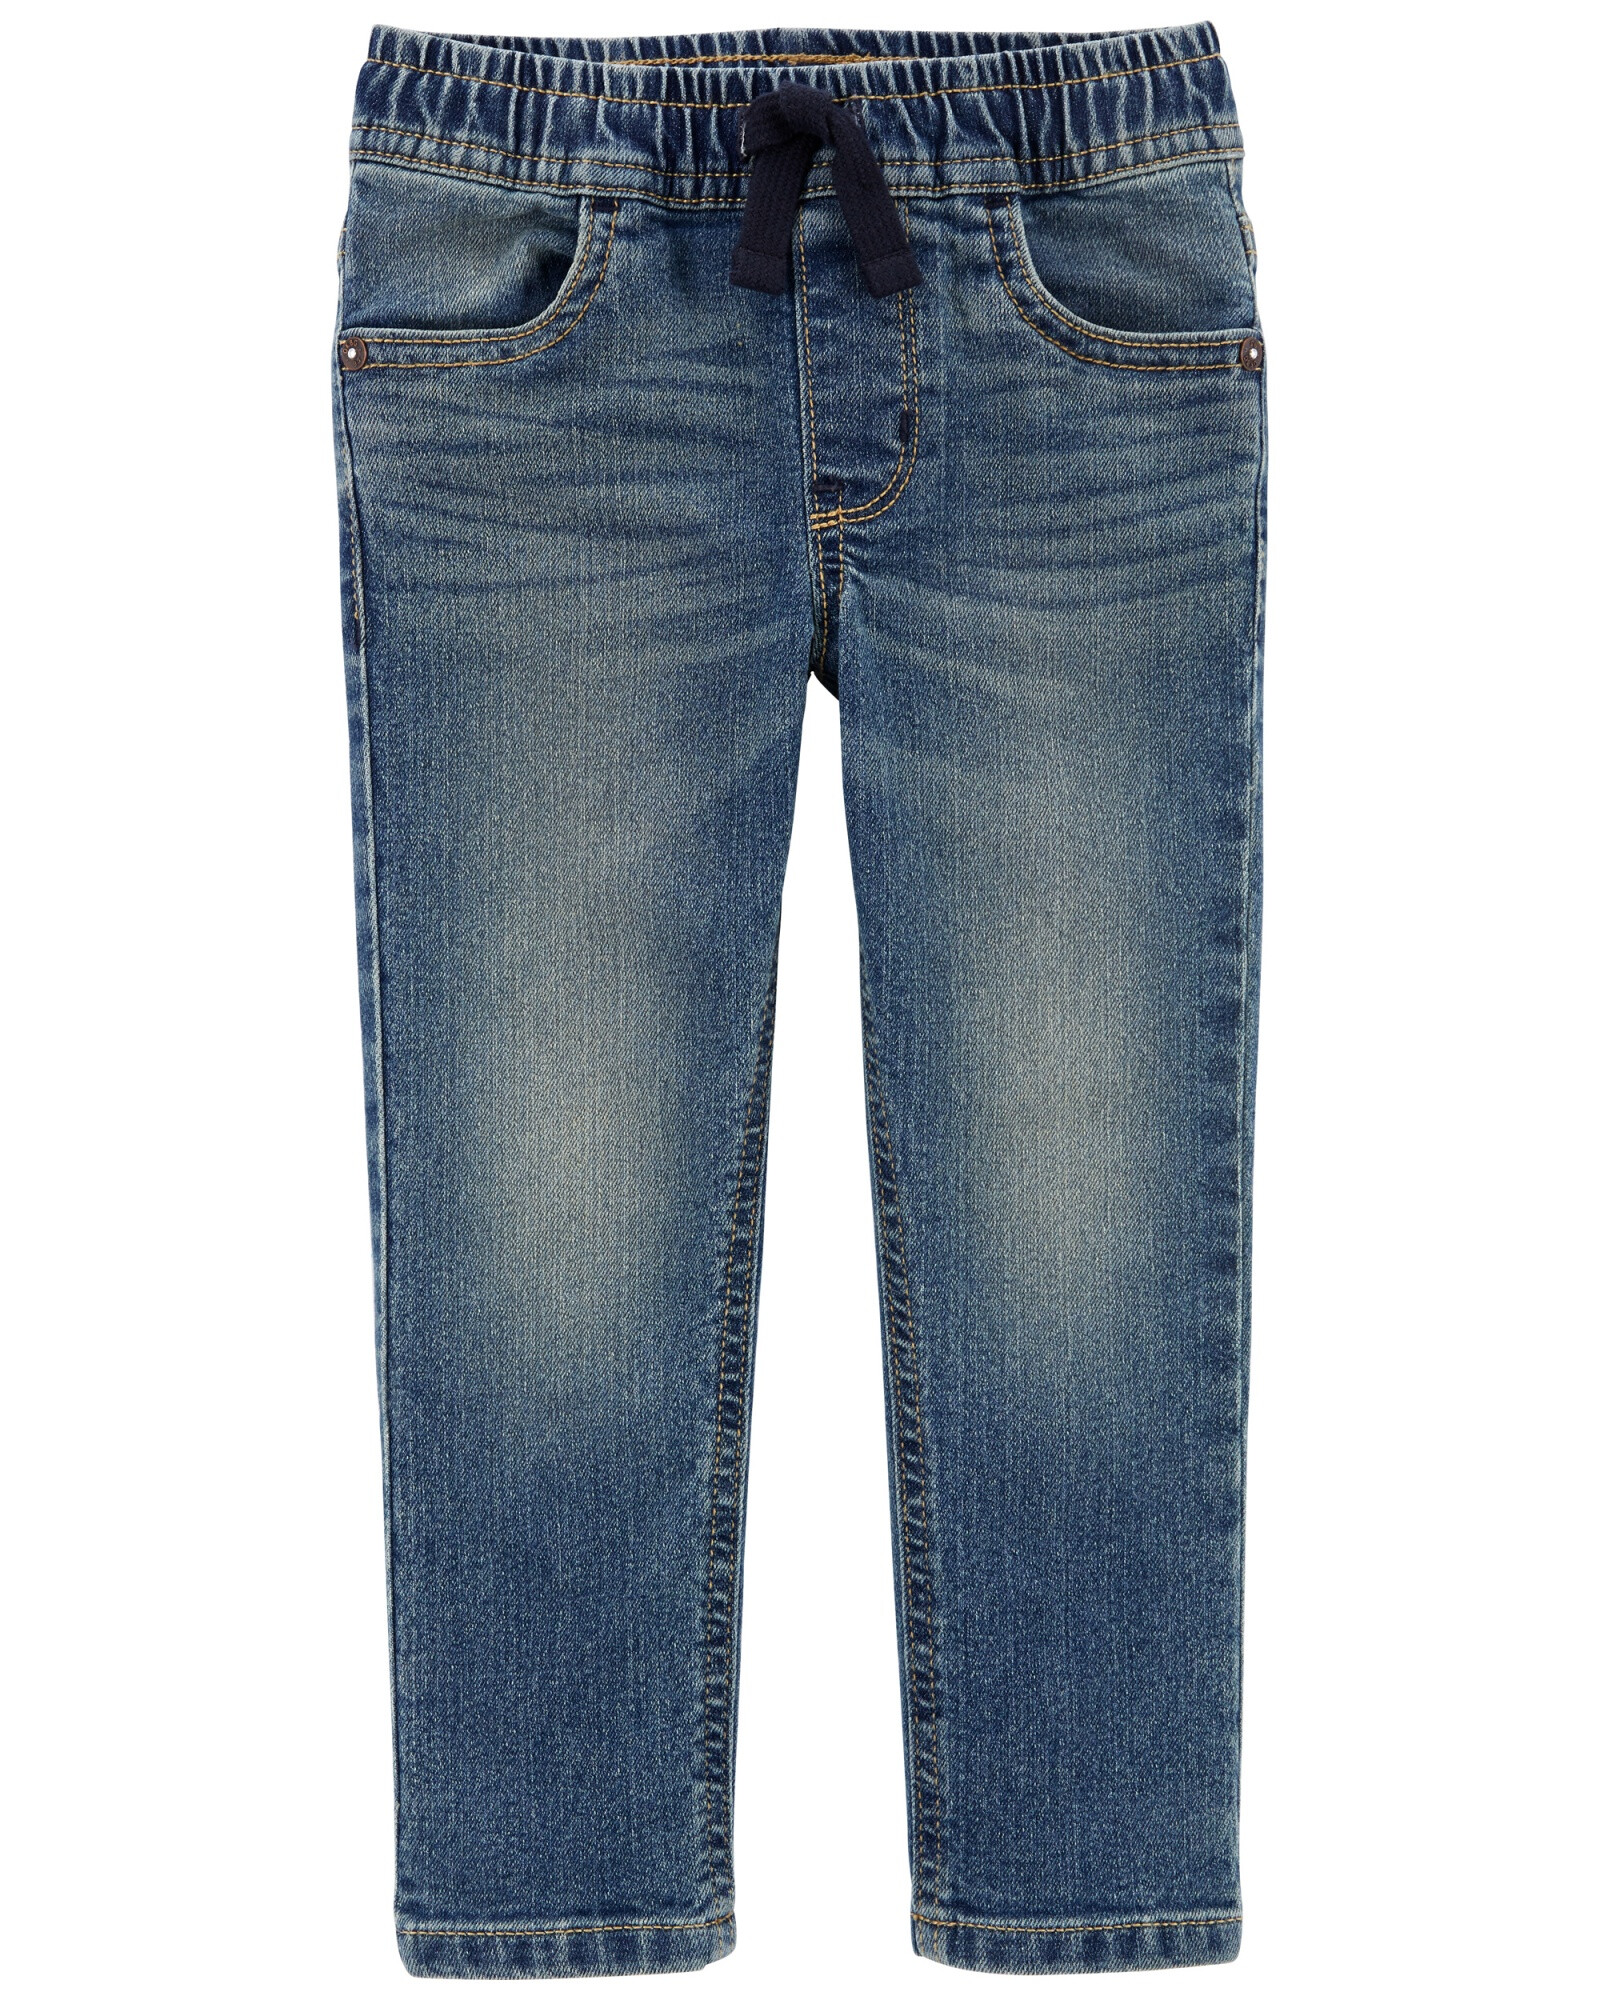 Pantalón de jean con cintura elastizada. Talles 12-24M Sin color